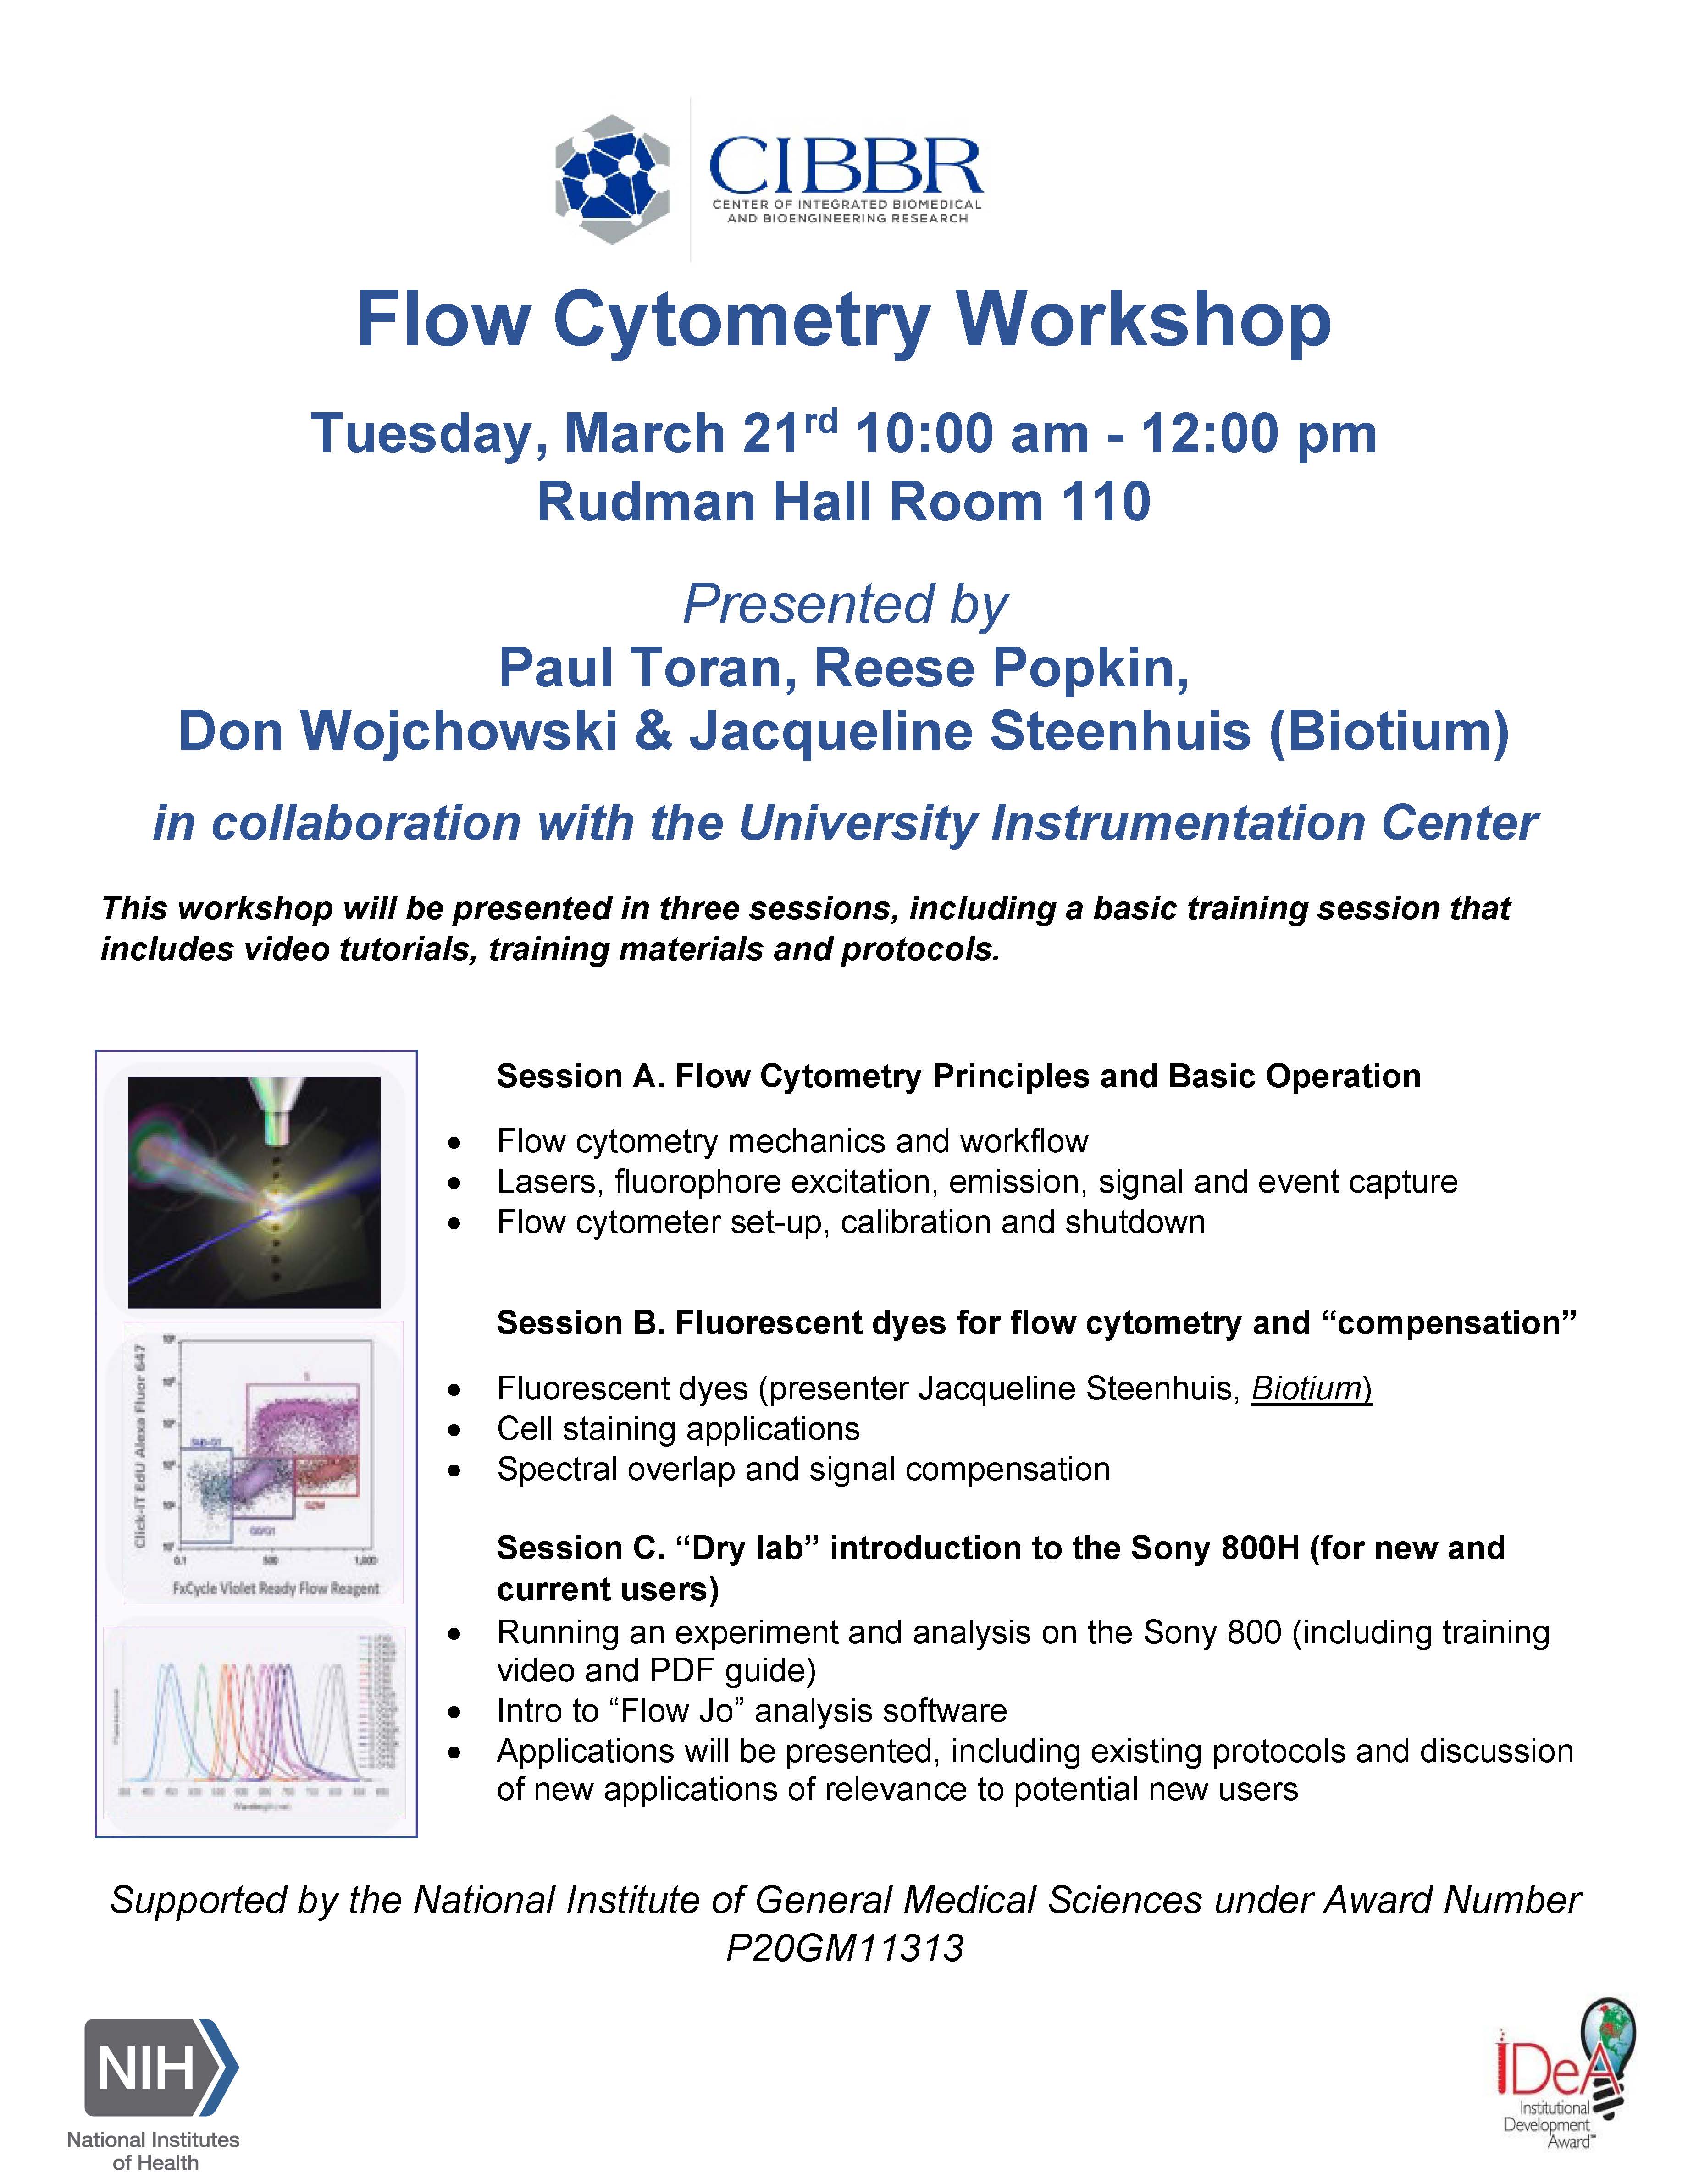 CIBBR Flow Cytometry Workshop Flyer